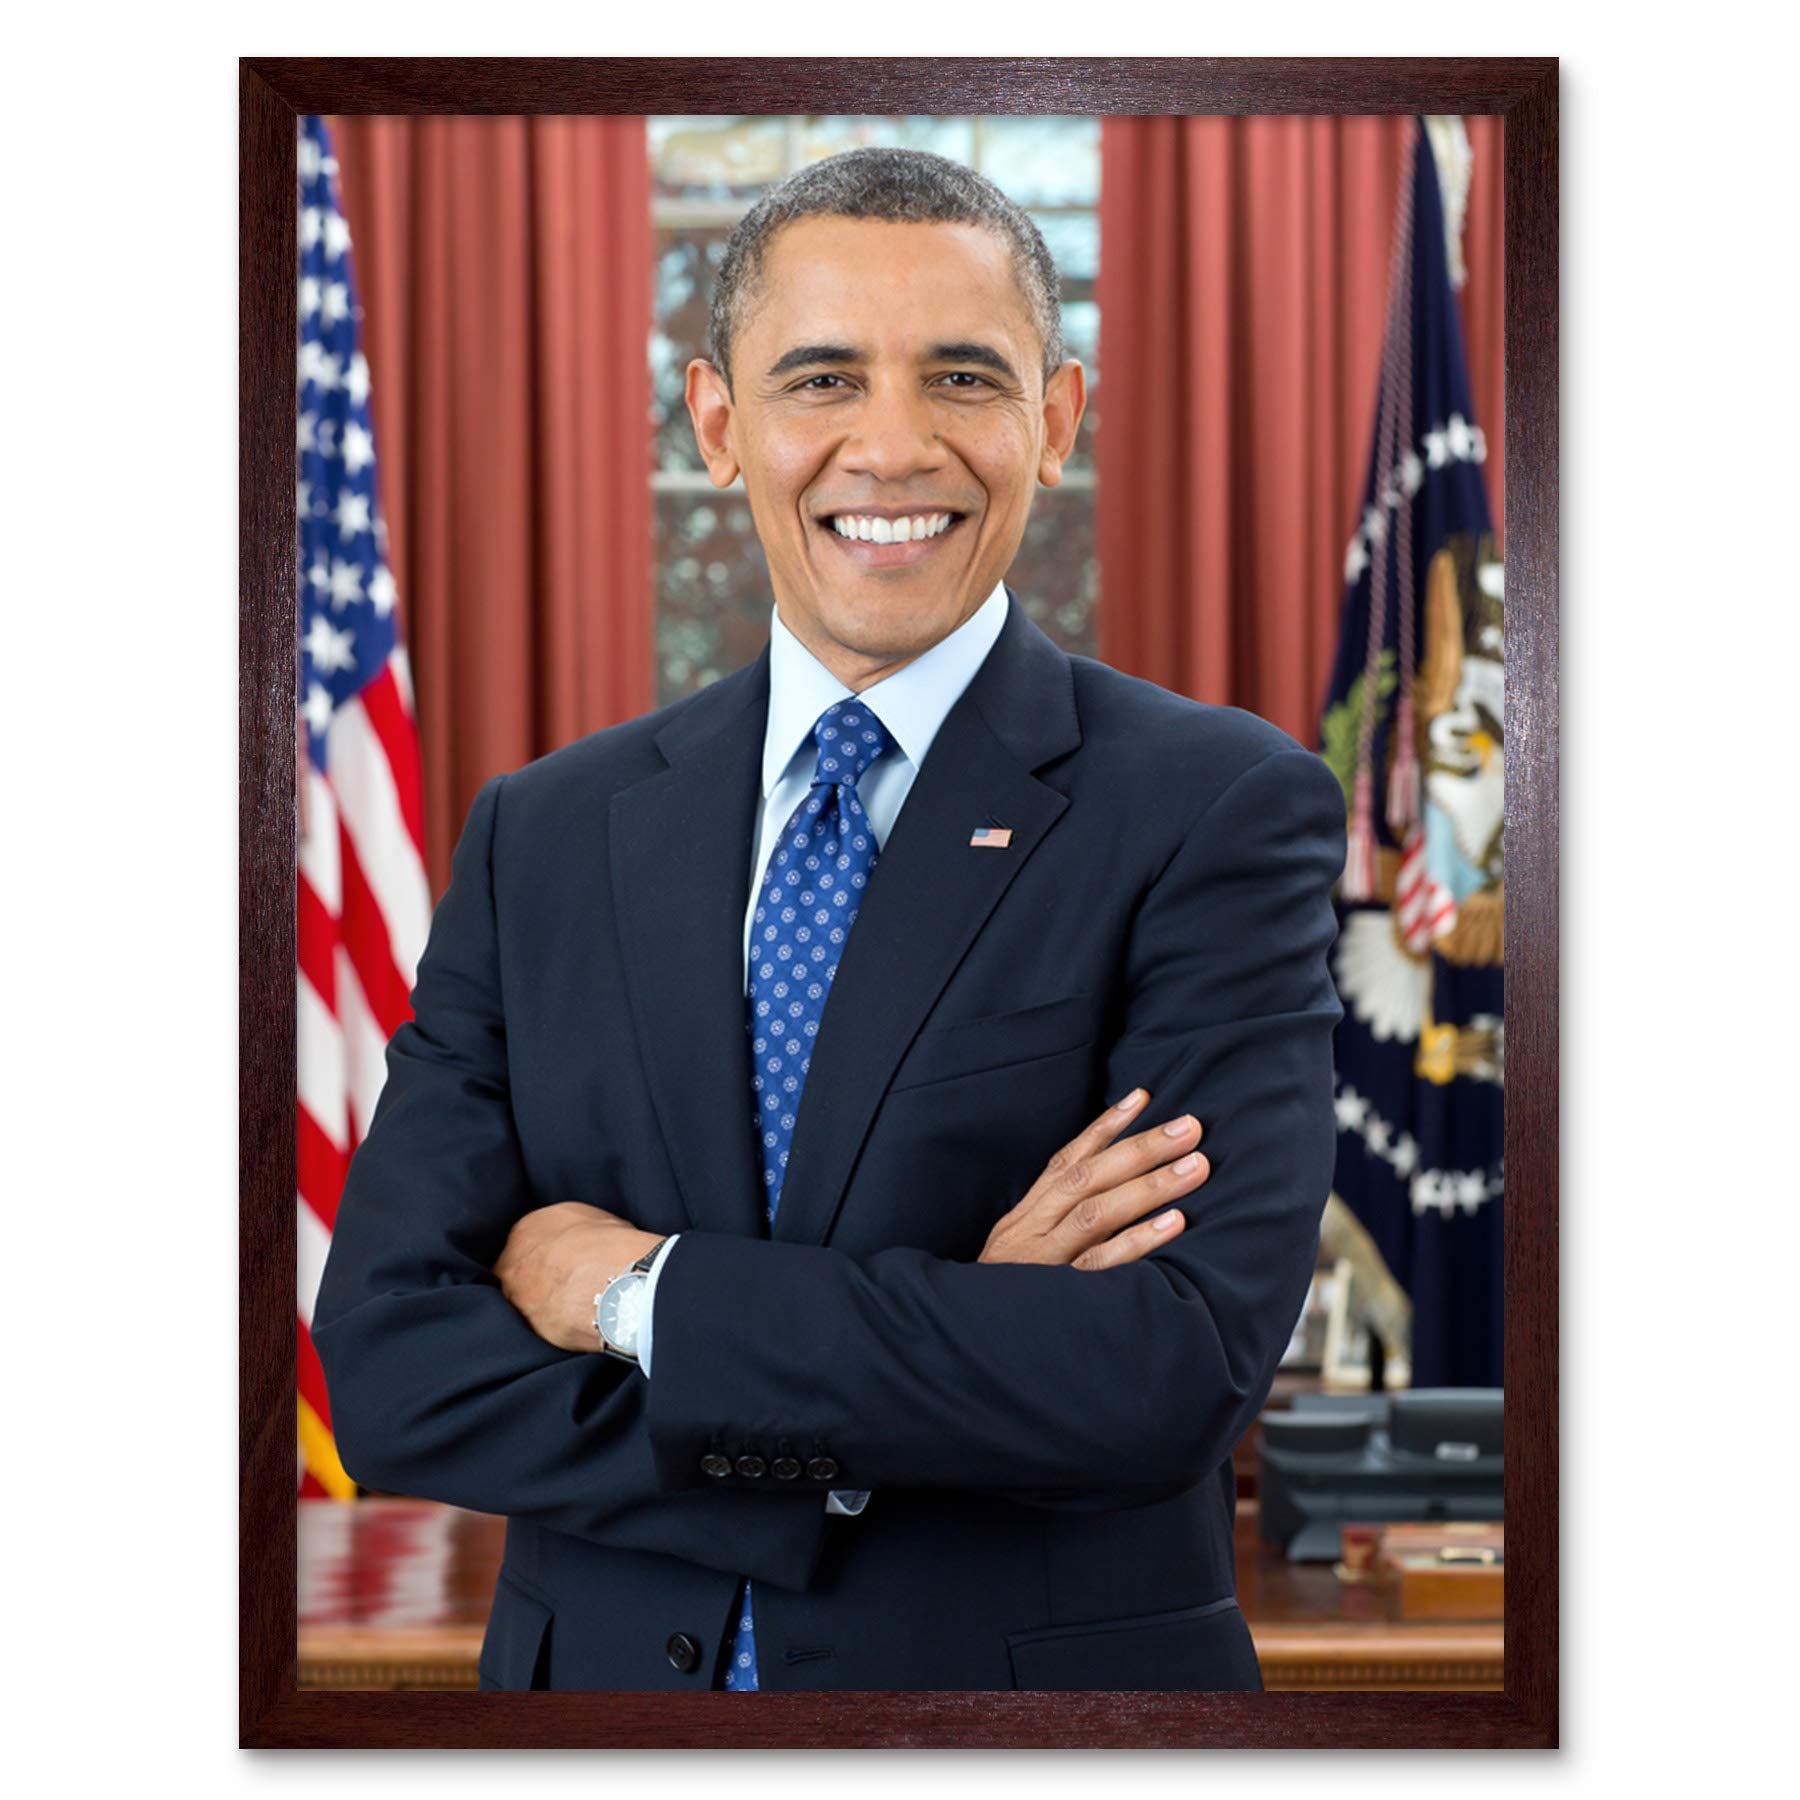 Souza Portrait US President Barack Obama Photo Art Print Framed Poster Wall Decor 12x16 inch Porträt Präsident Fotografieren Wand Deko